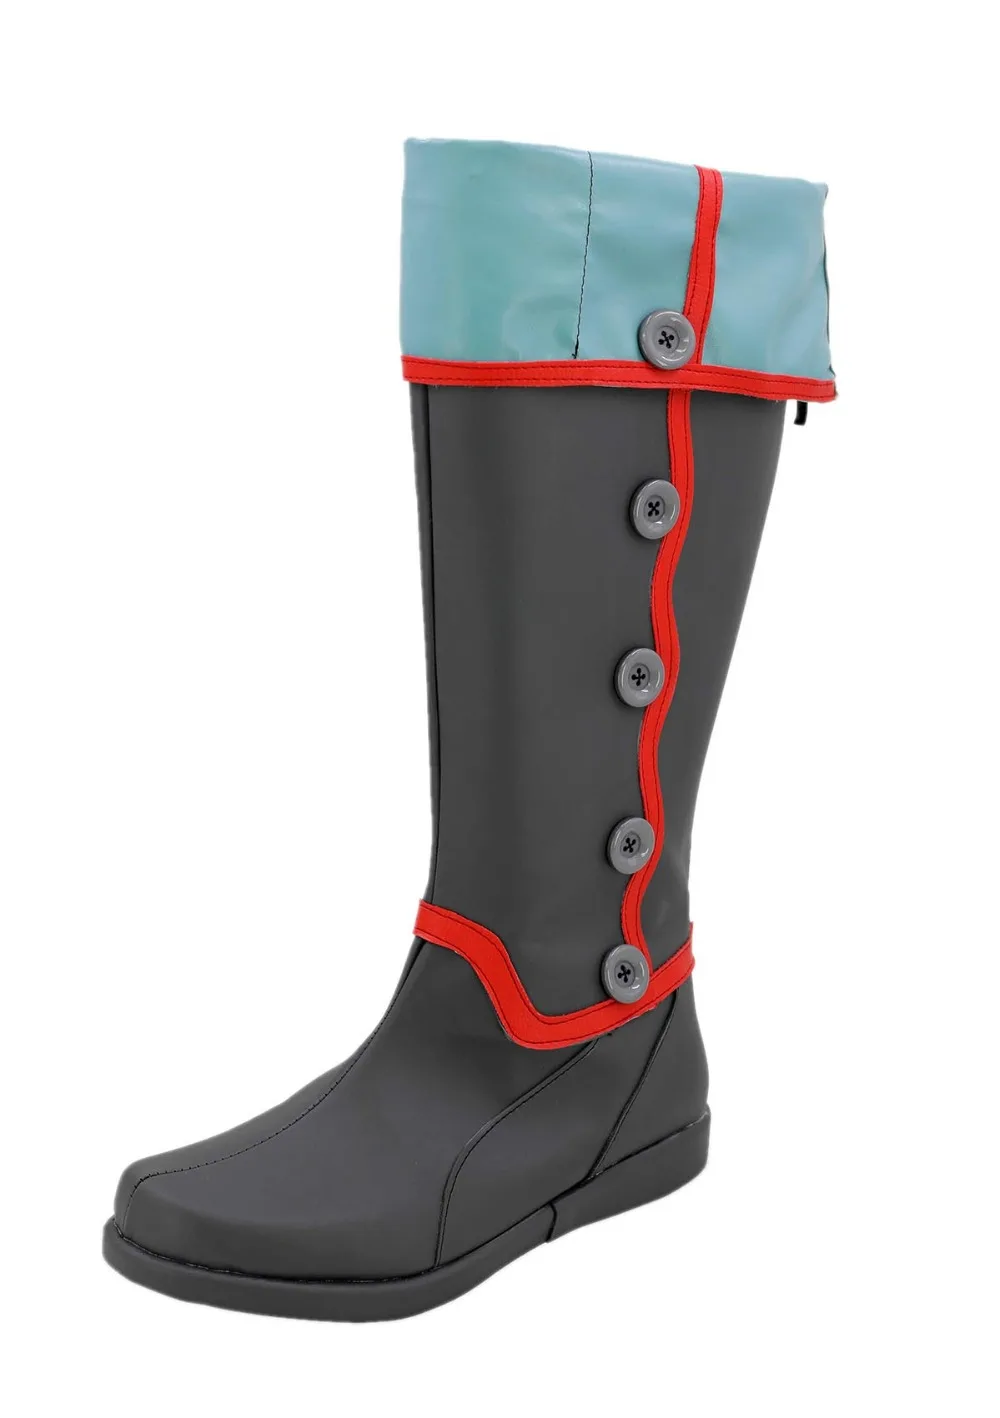 Fate/Grand Order, Ботинки для косплея Хиджиката Тошизо, Обувь для женщин и мужчин, сшитая на заказ3